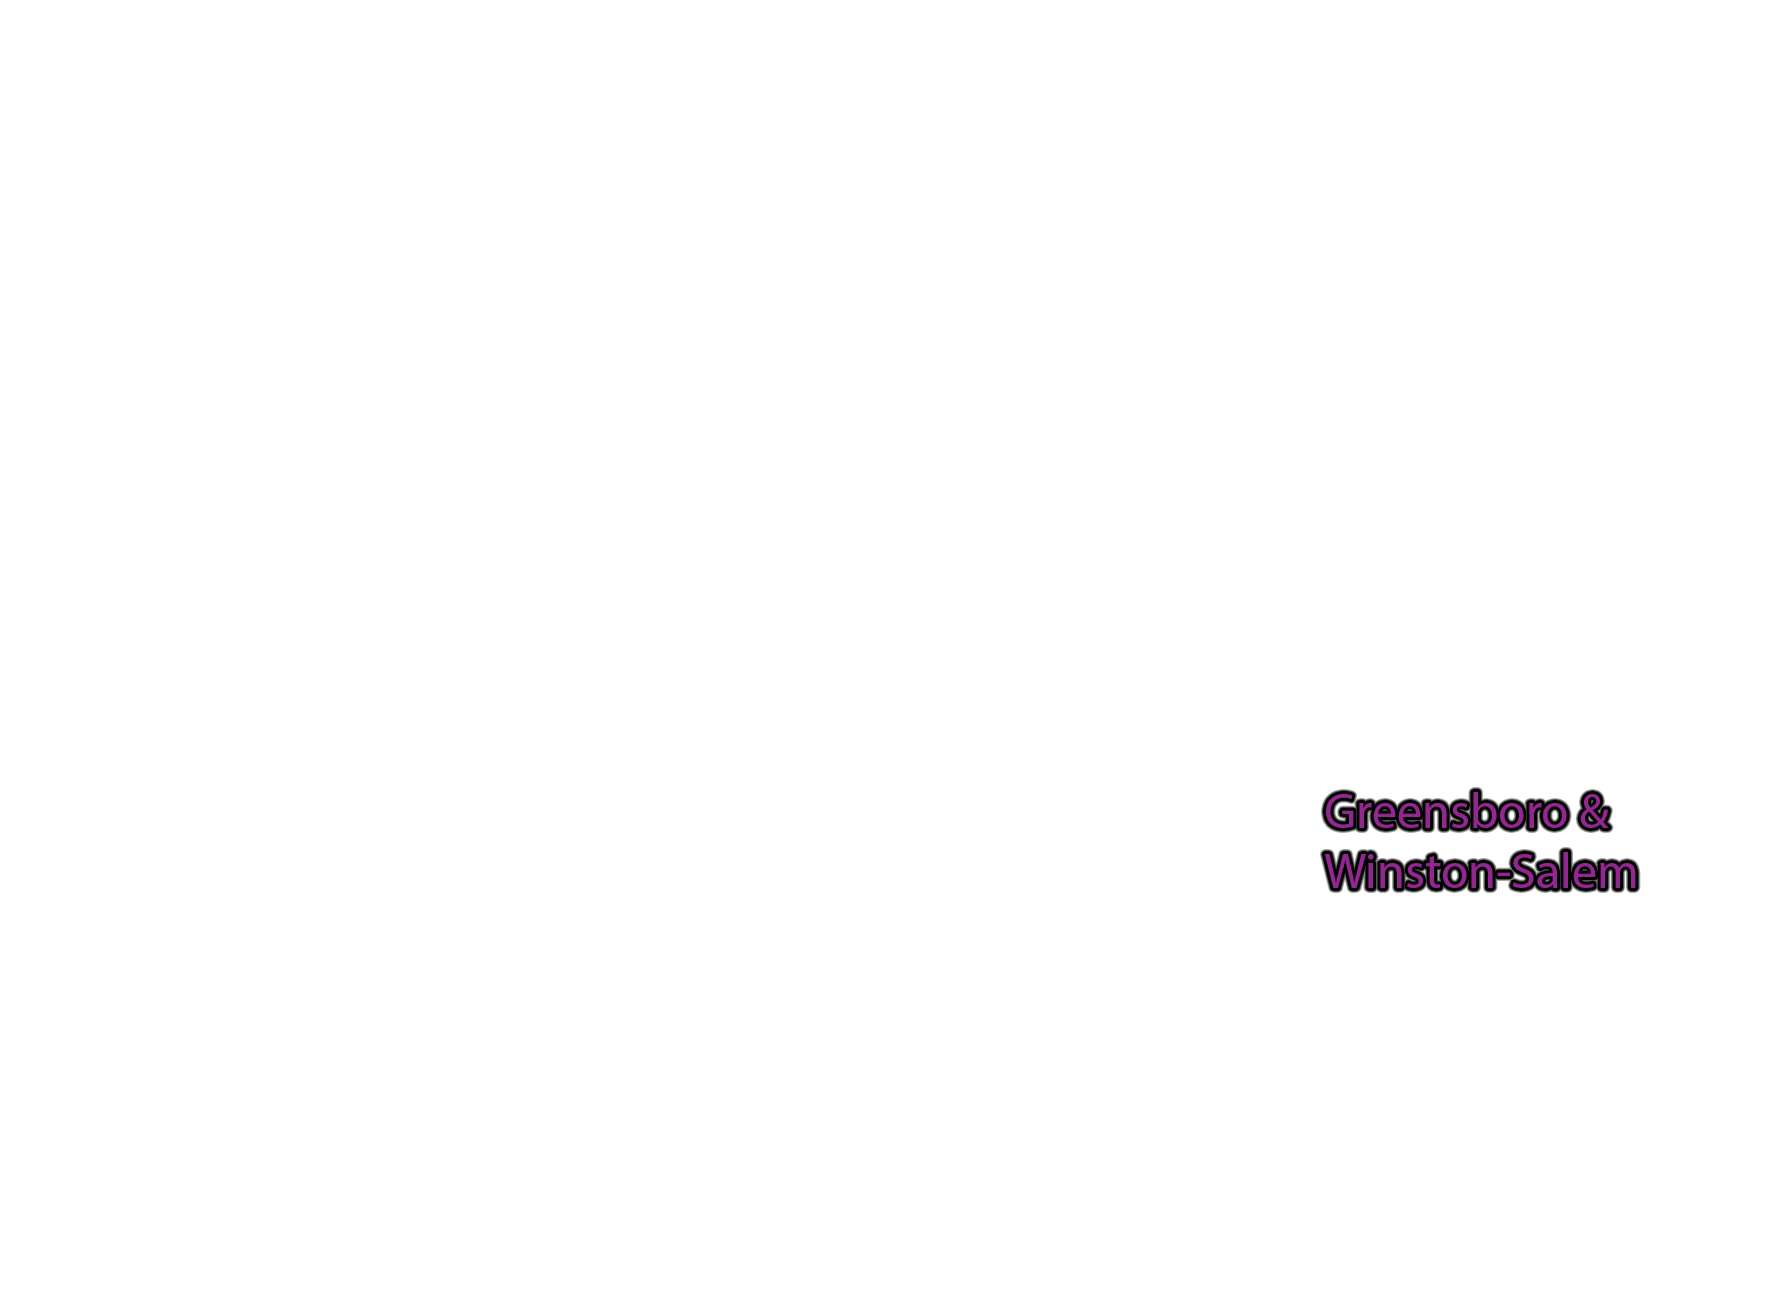 Greensboro-&-Winston+Salem label with glow